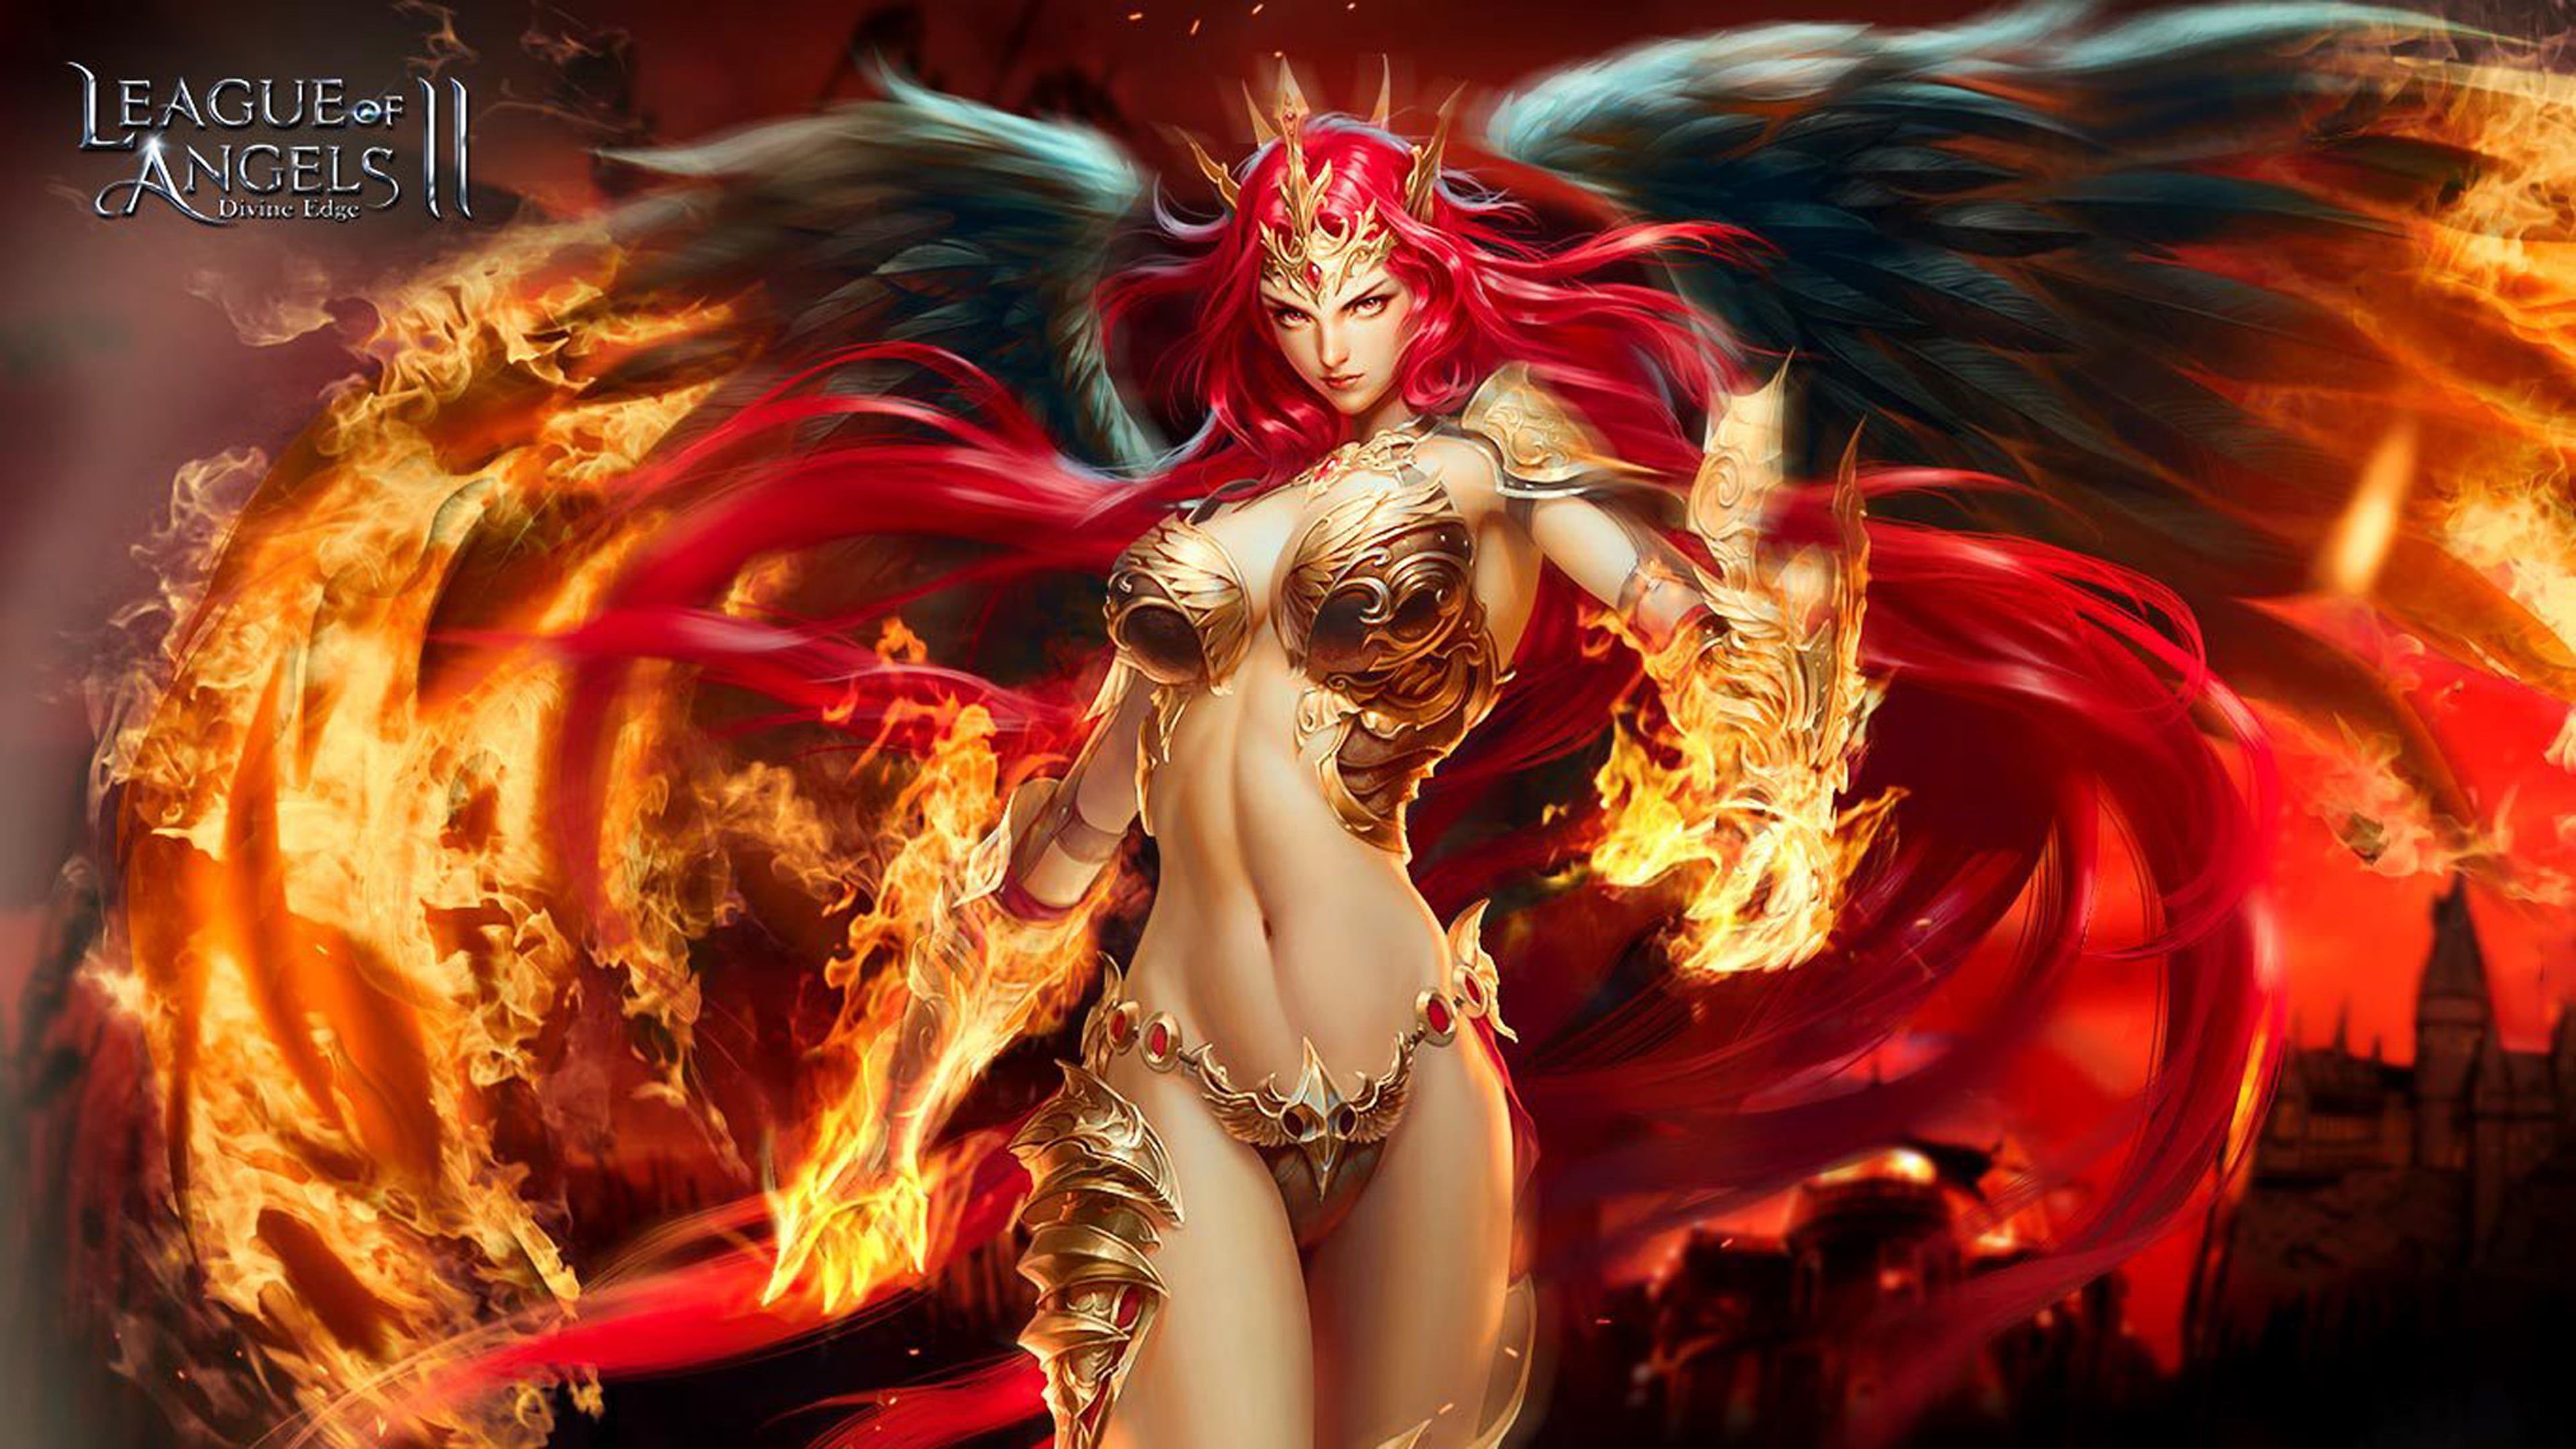 League of Angels, mikaela angel girl, magic skills, fire art depiction, 3840x2160 4K Desktop